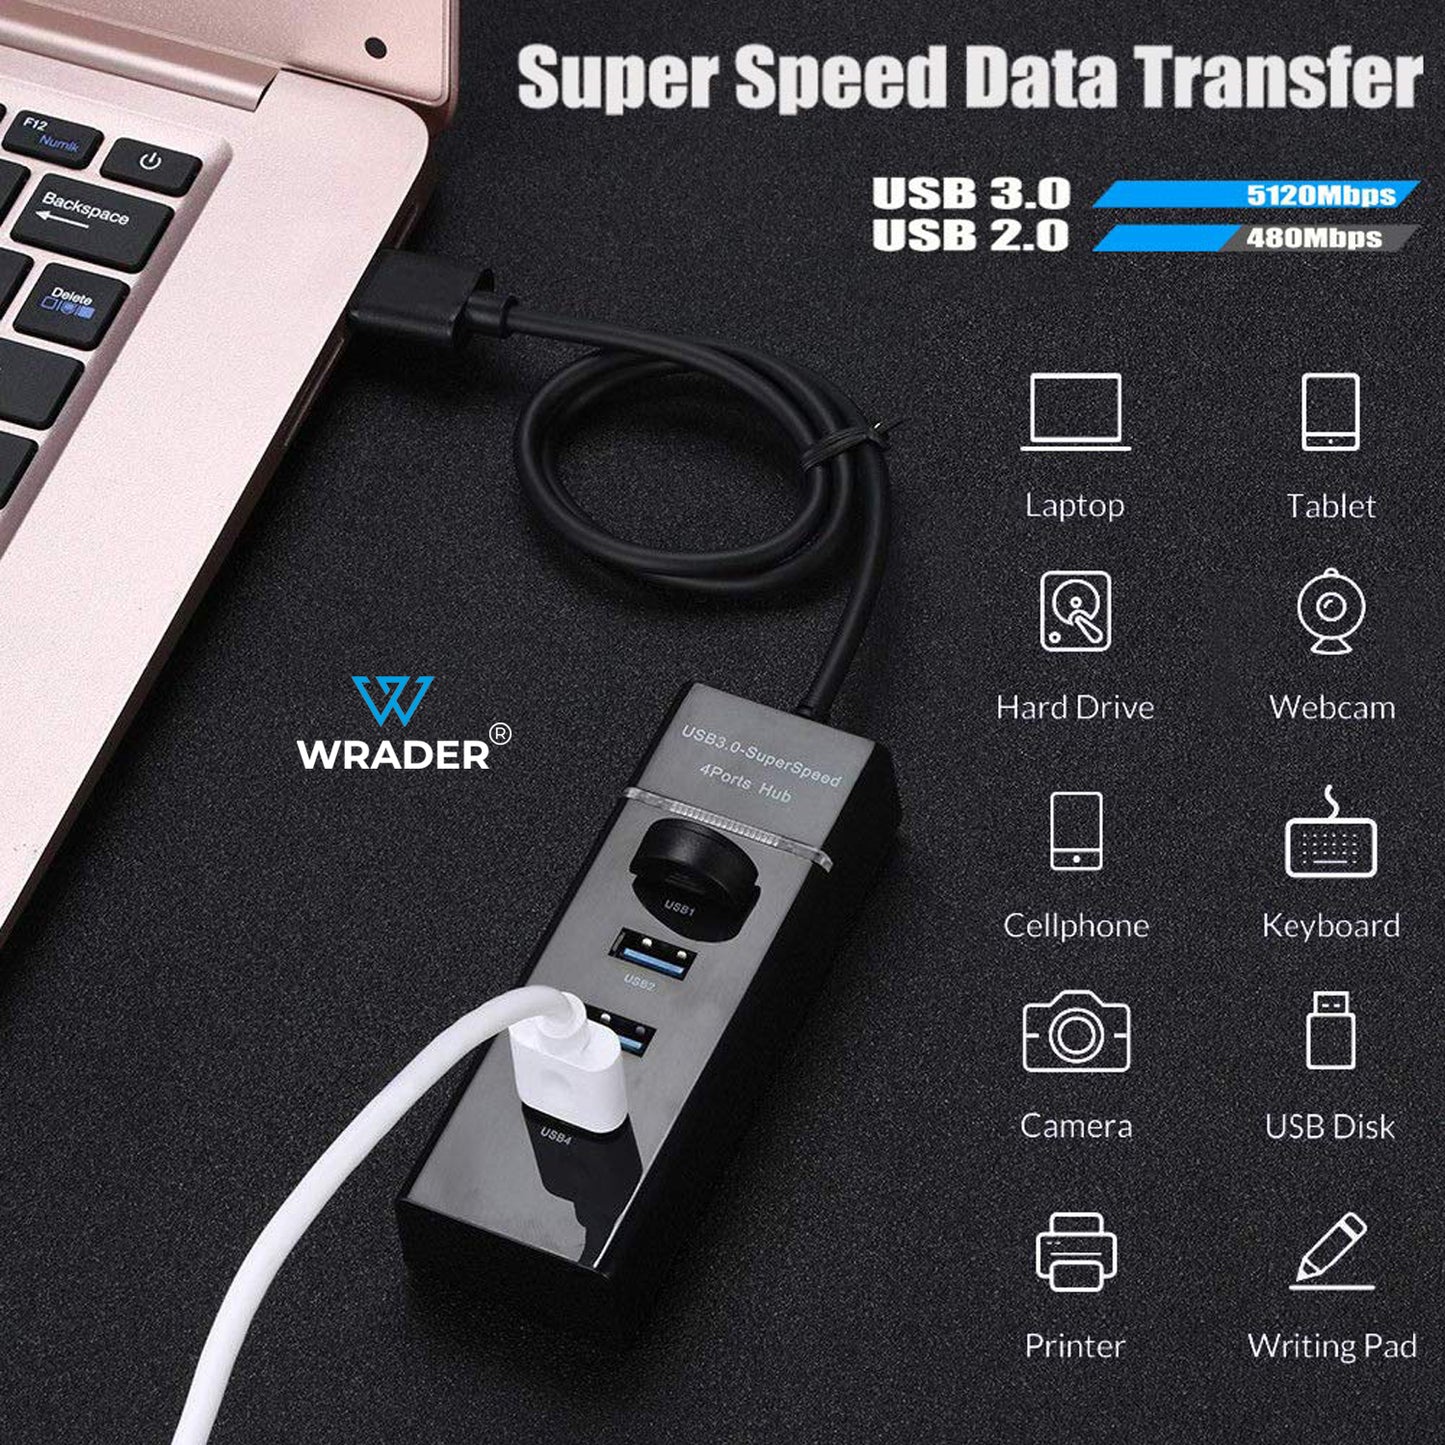 WRADER 5Gbps Super Speed USB 3.0 Hub 4 Ports USB Hub for Laptops, Desktops, Smartphones, USB Flash Drives, Gaming Consoles, Mouse, Keyboards, Monitors, Printers Combo Set (Black)